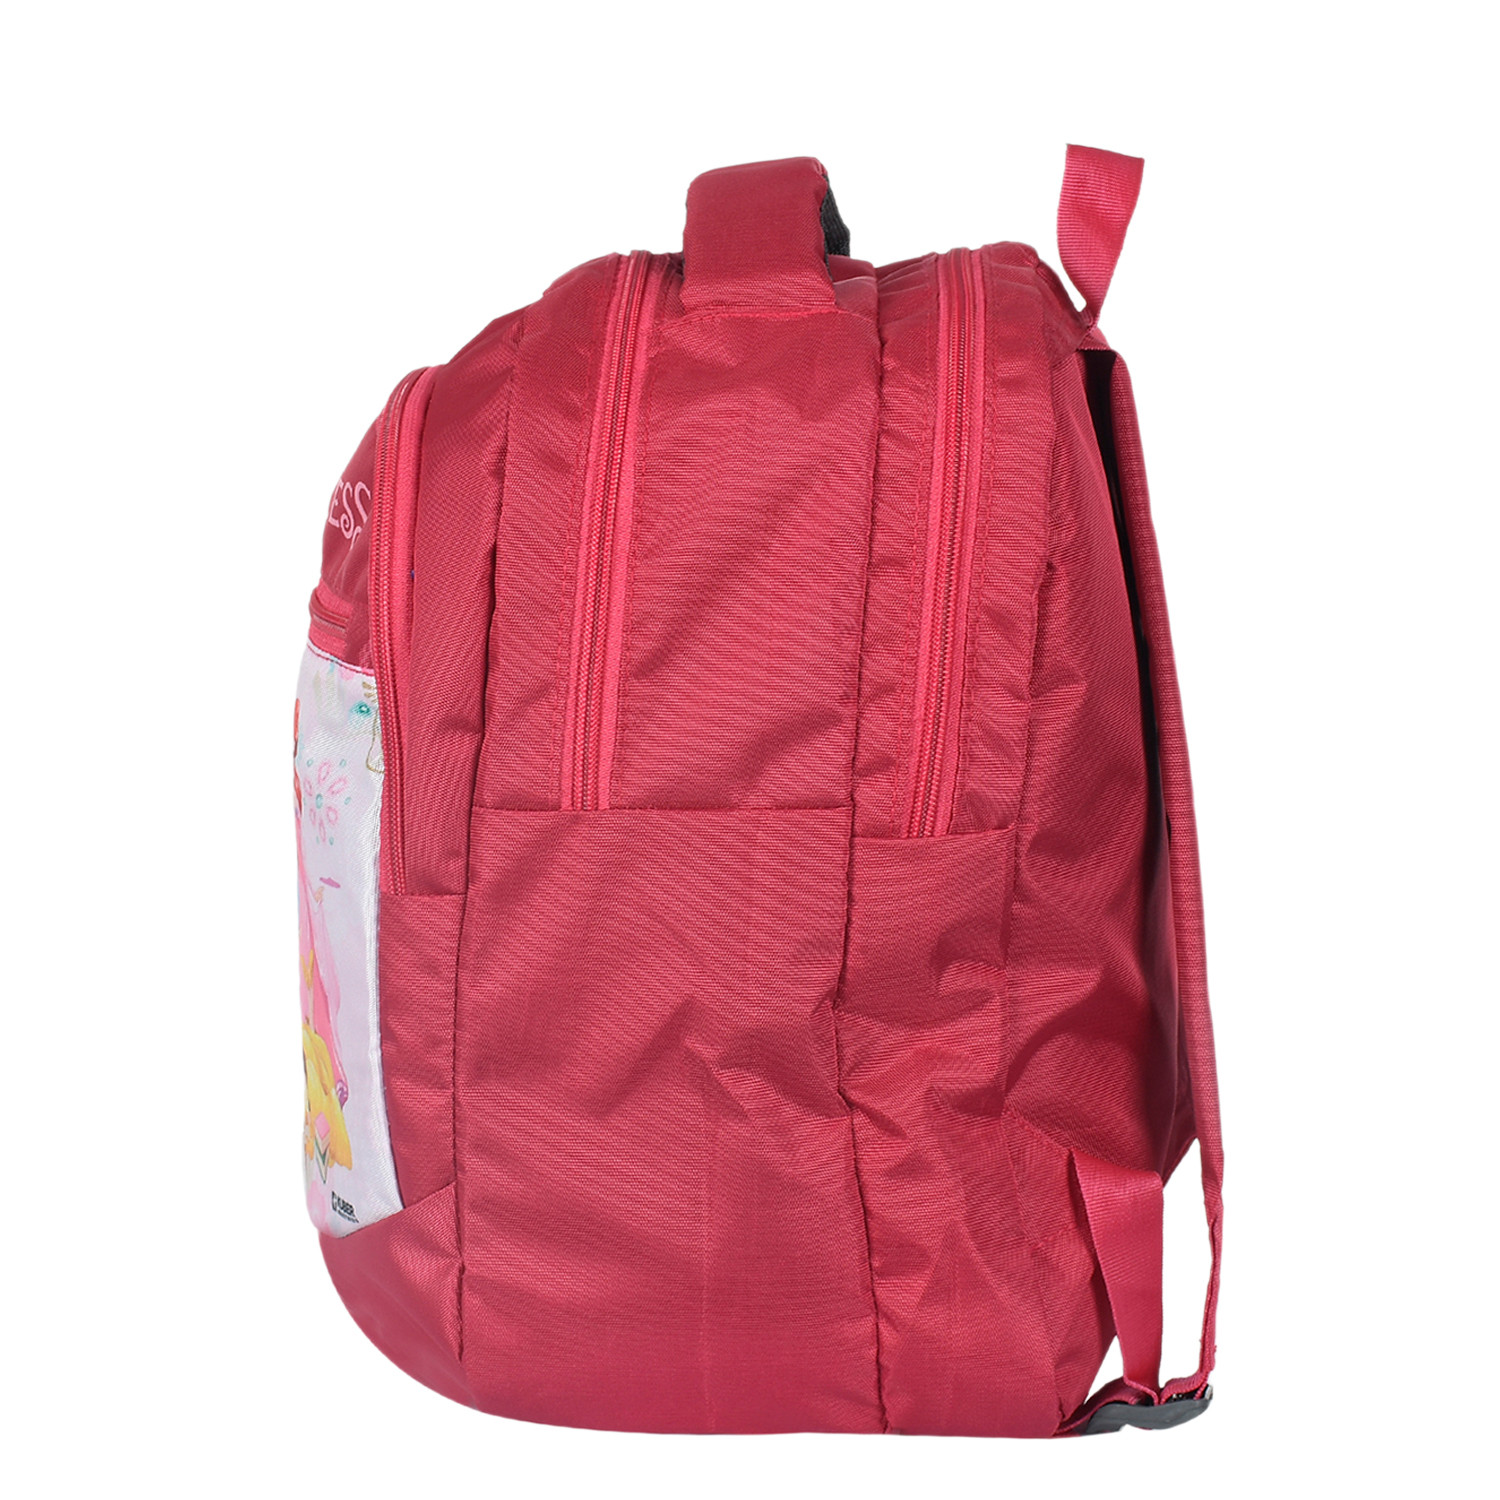 Kuber Industries Disney Princess School Bag | Kids School Bags | Student Bookbag | Spacious School Bag | School Bag for Girls & Boys | School Backpack for Kids | 4 Compartments School Bag | Pink